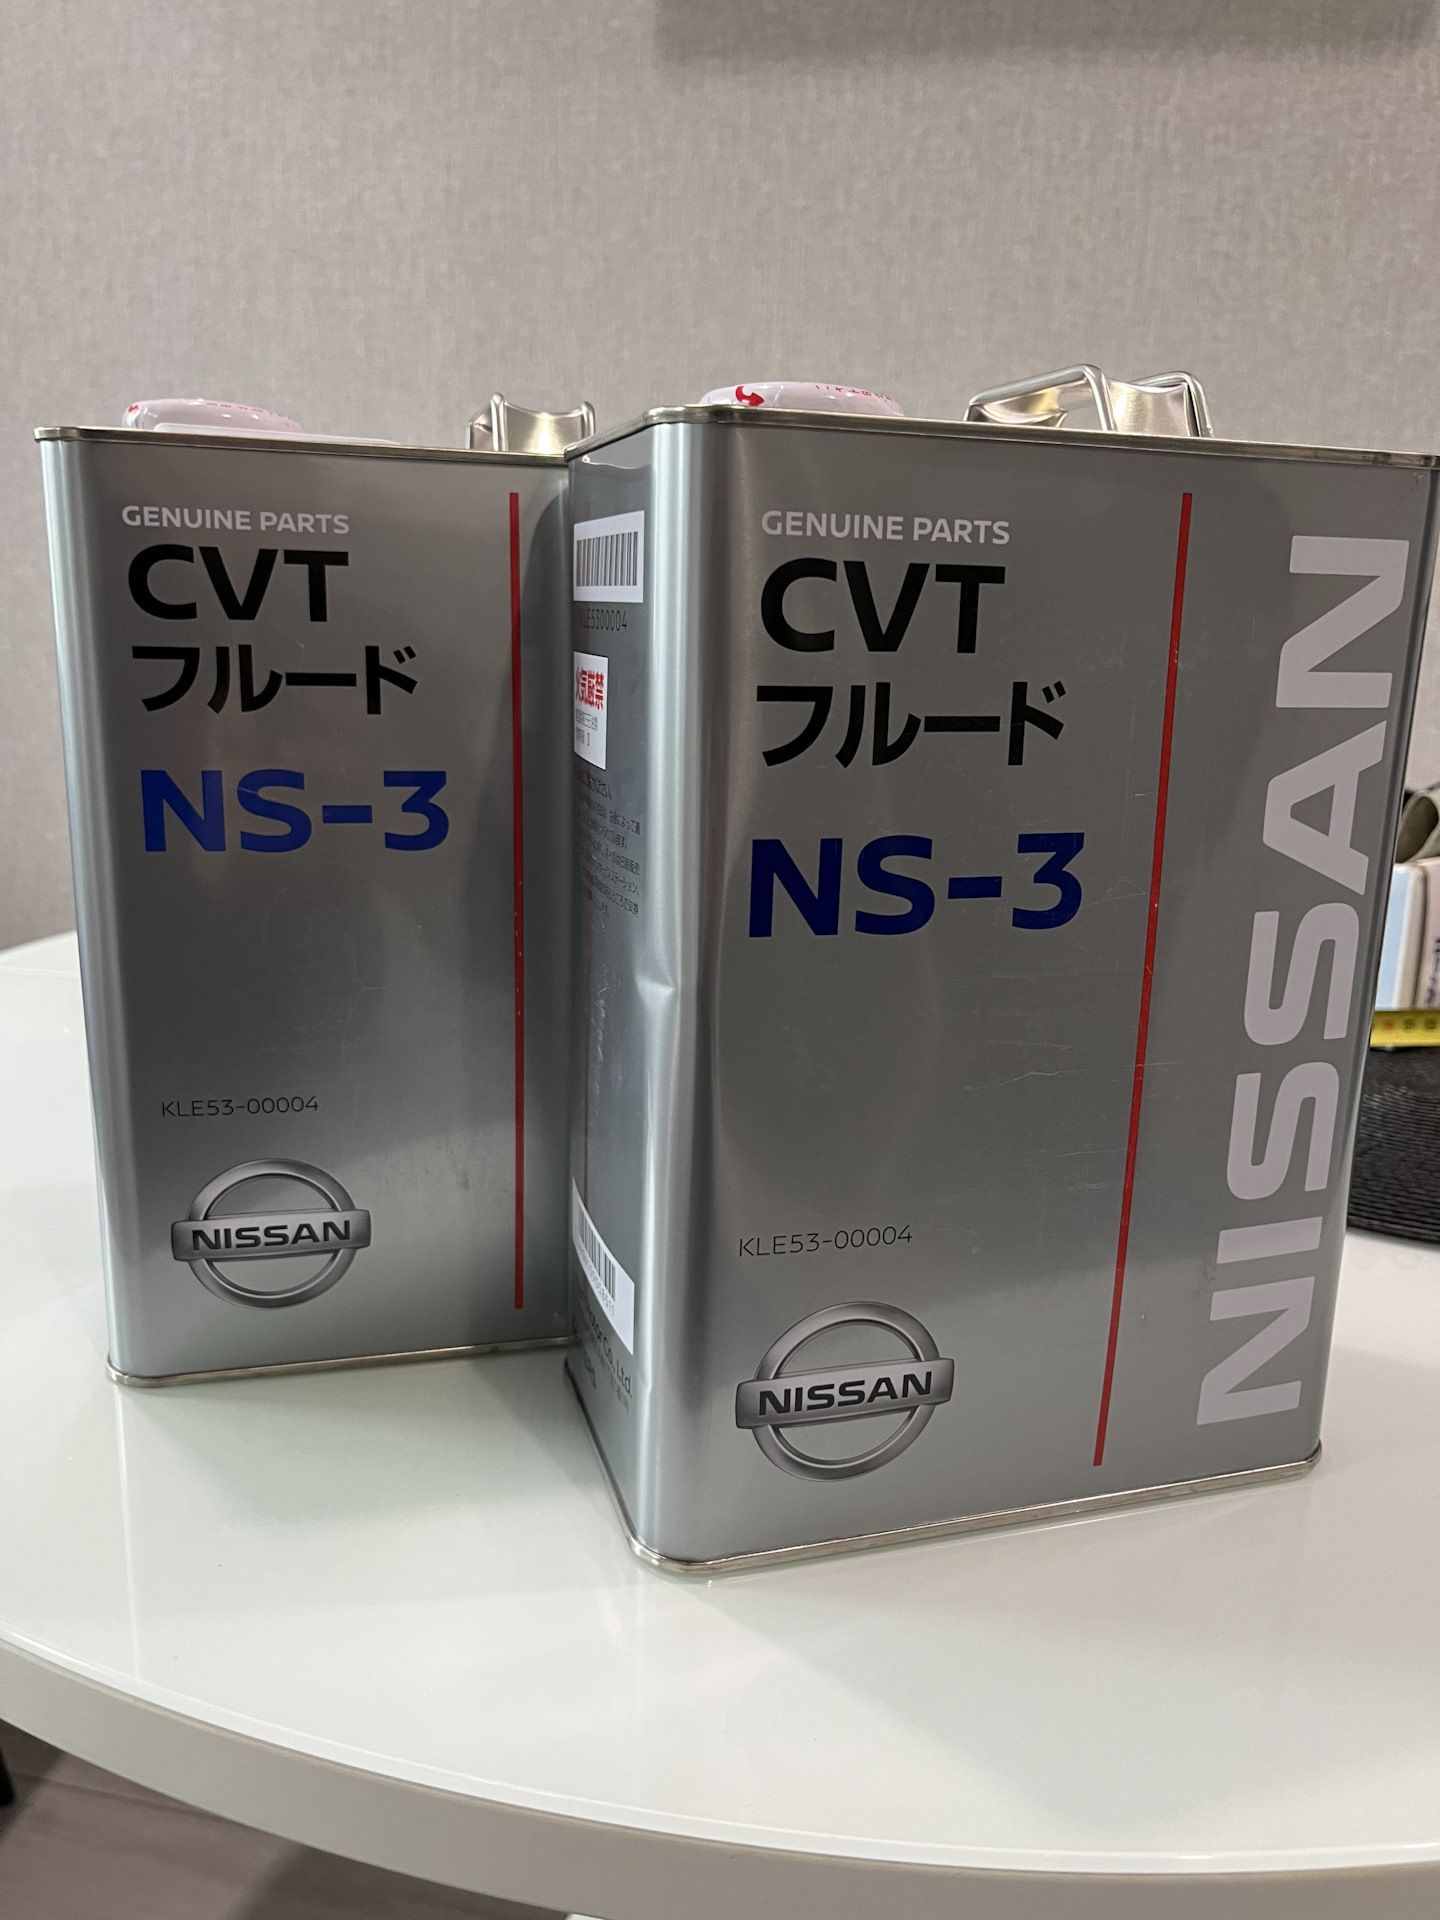 Kle5300004. Nissan CVT NS-2 4л. Ns3 масло на Ниссан артикул. Nissan CVT NS-3. Nissan NS-3 CVT Fluid.